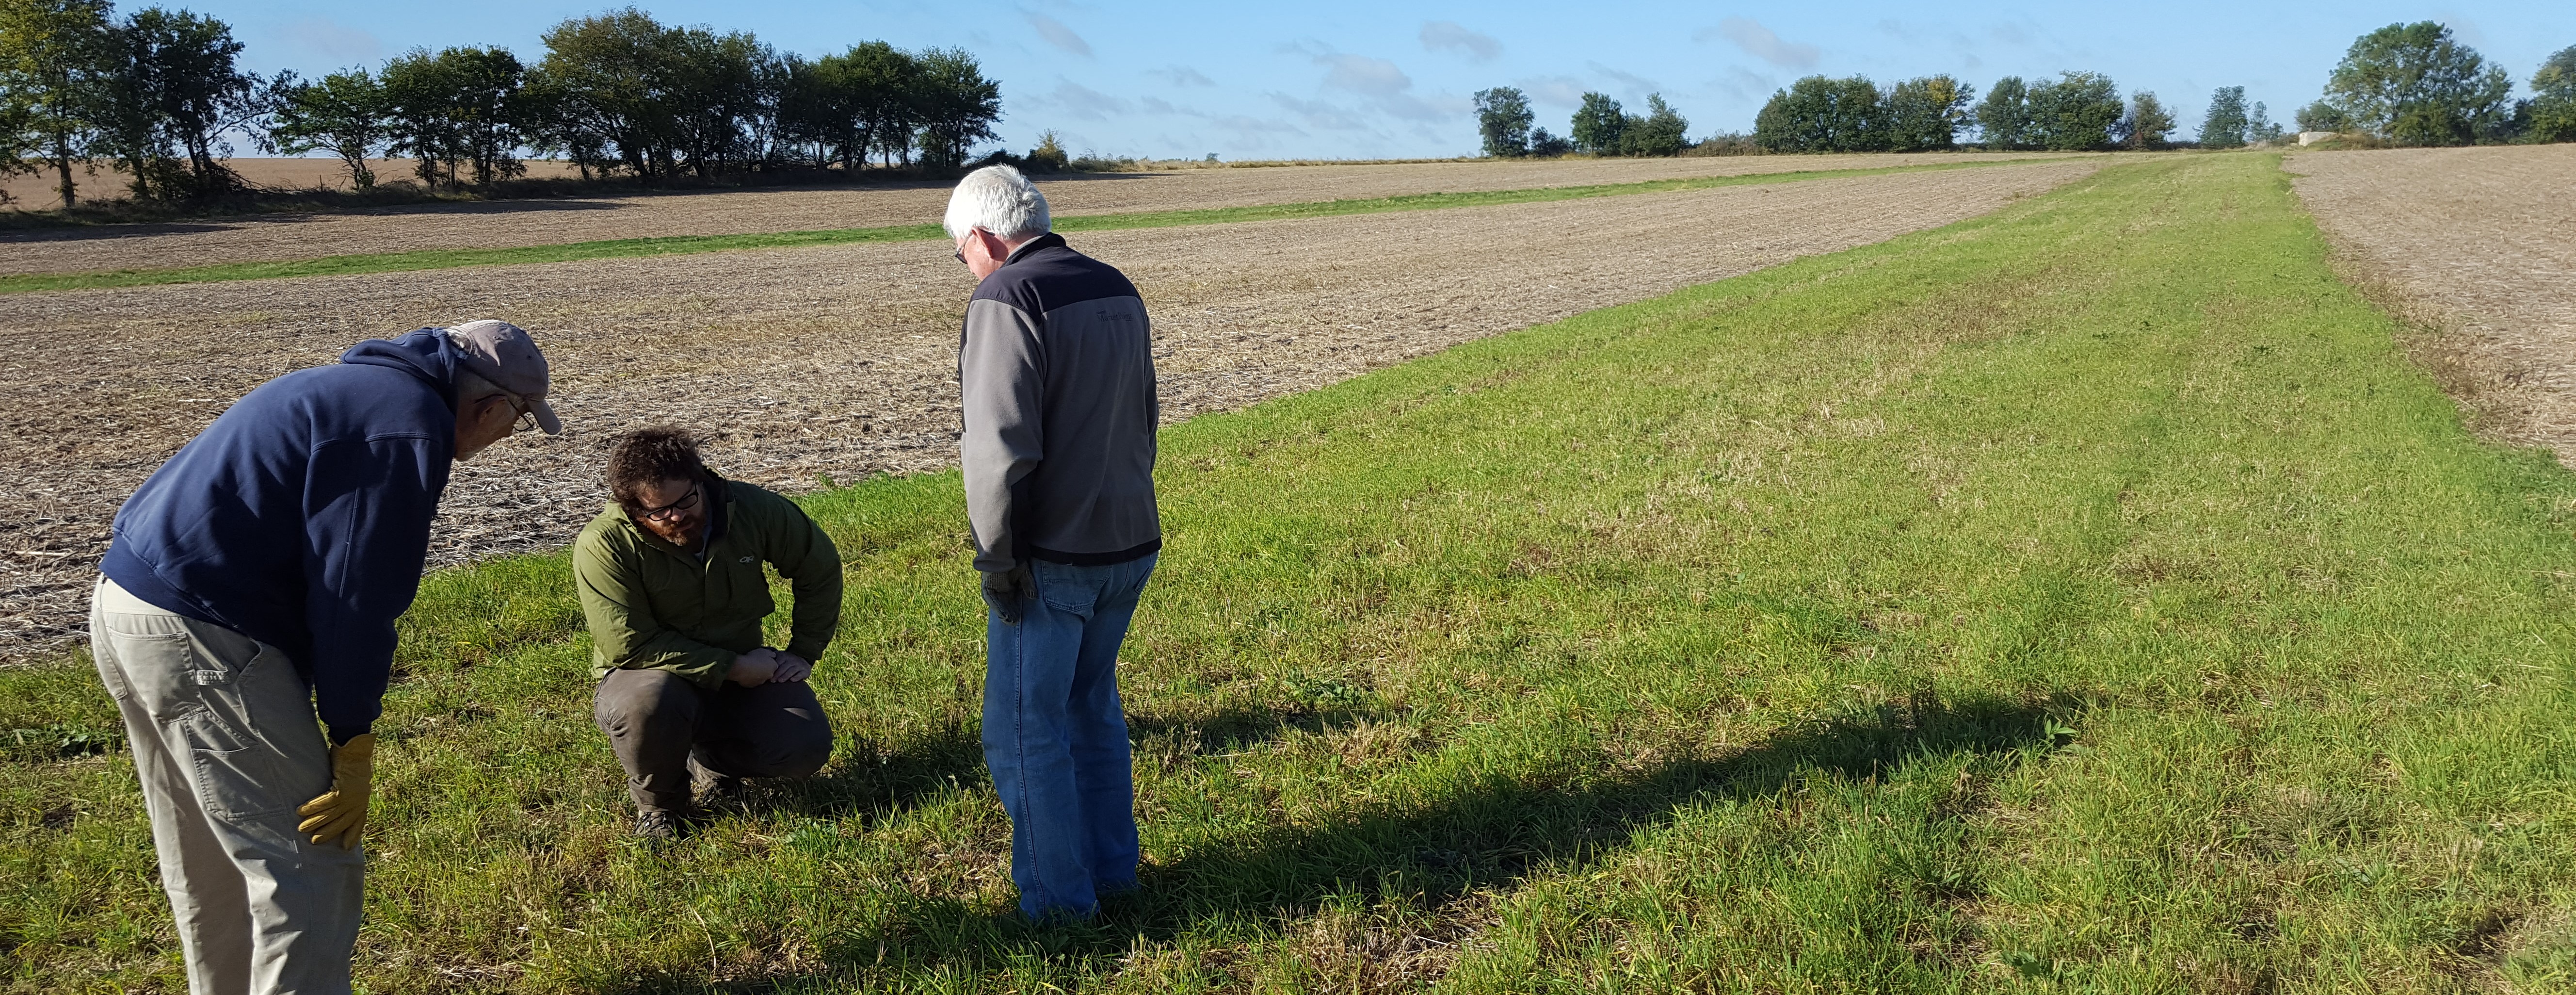 Surveying with landowner